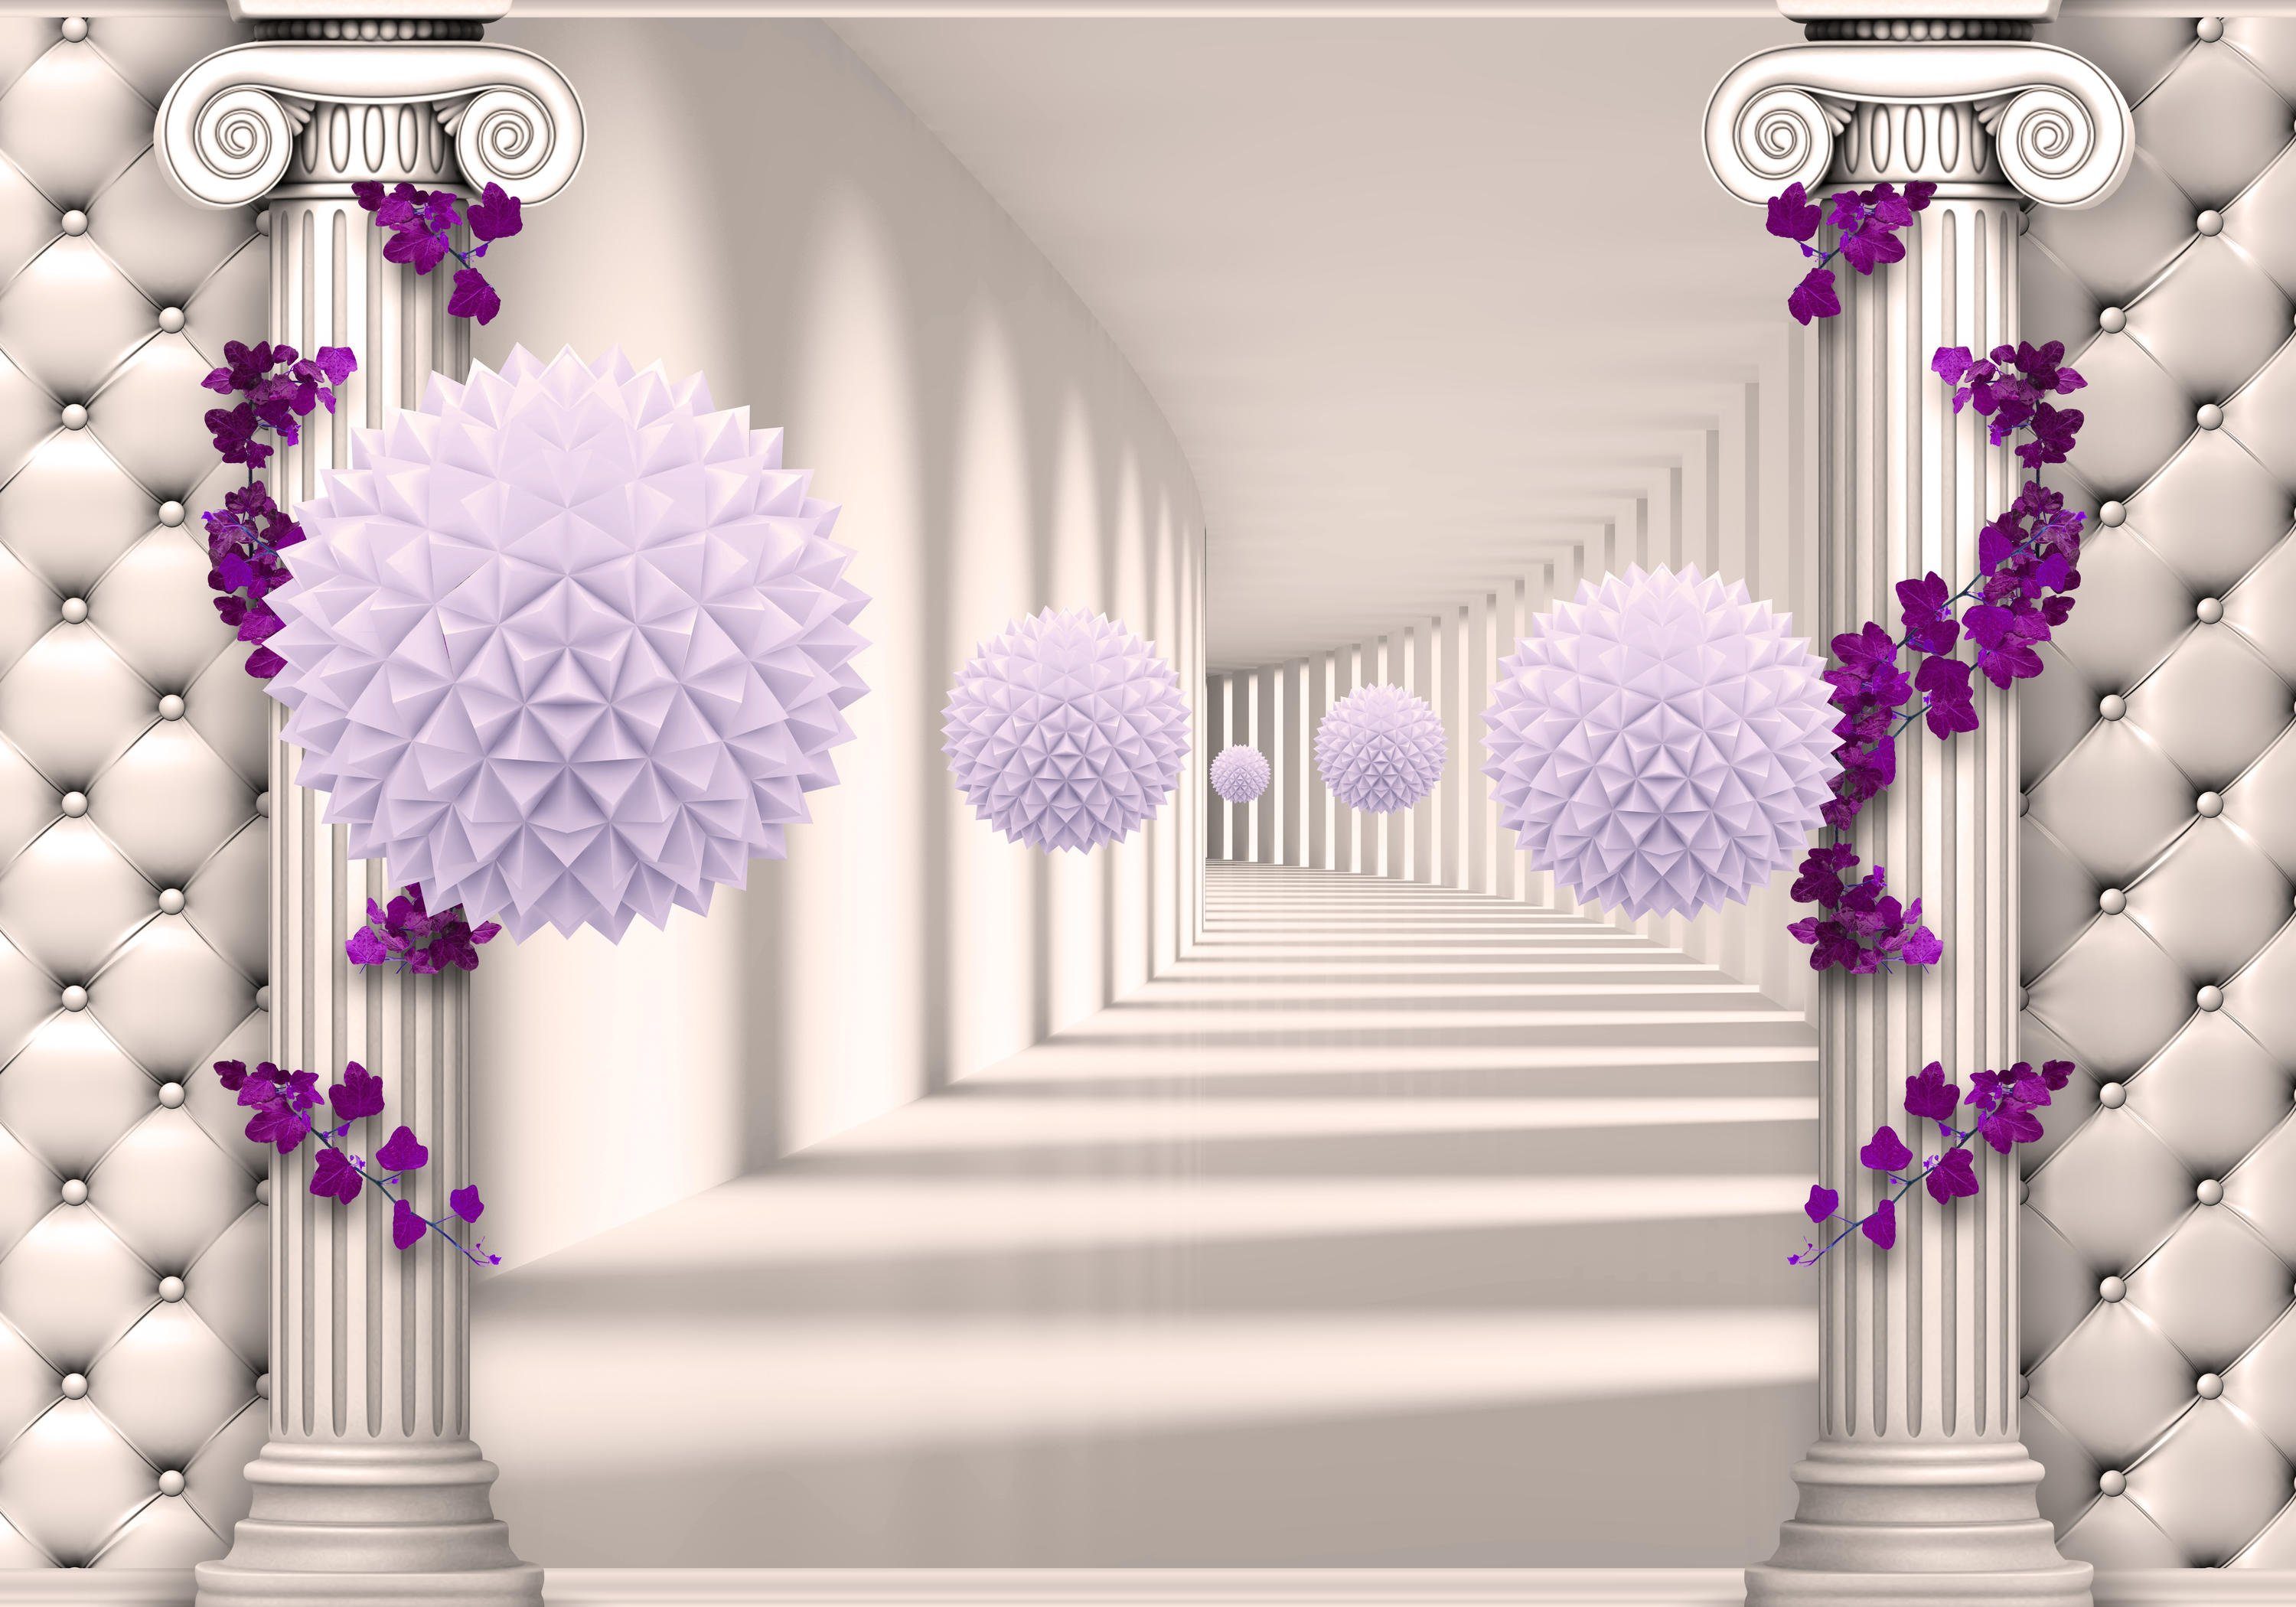 wandmotiv24 Fototapete Blättern Säulen glatt, lila, violett Wandtapete, matt, Korridor Vliestapete Motivtapete